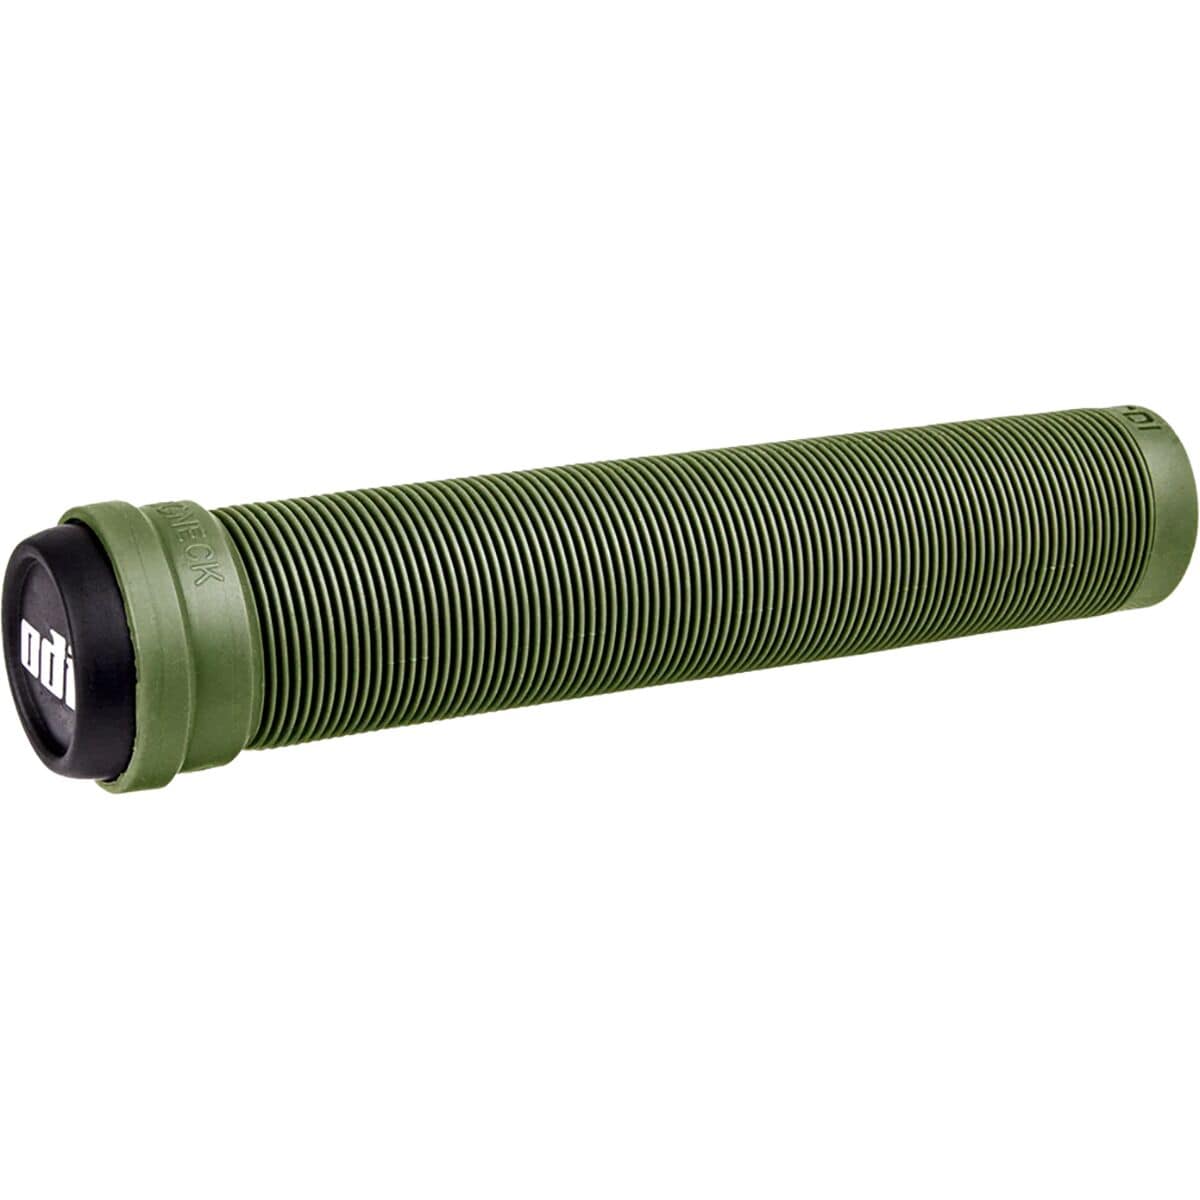 ODI Soft X-Longneck Lock-On Grips Army Green, One Size -  HT3705